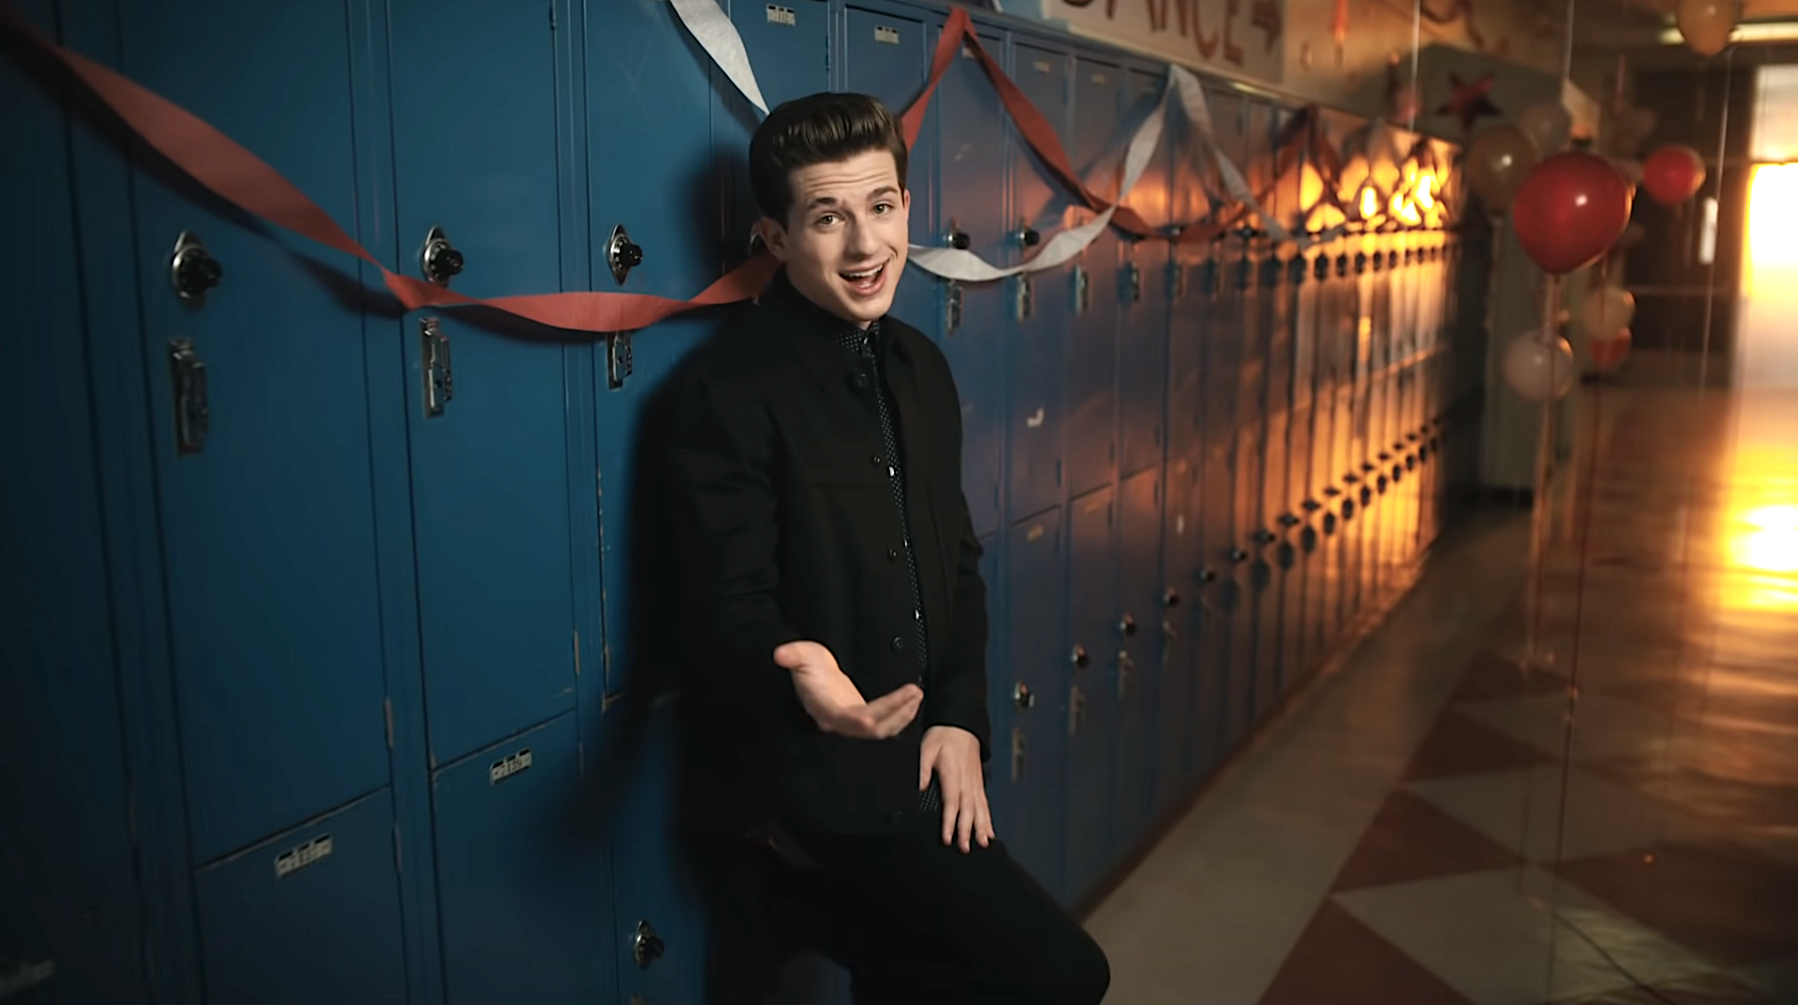 Charlie leaning against lockers in a school hallway as he sings in a music video